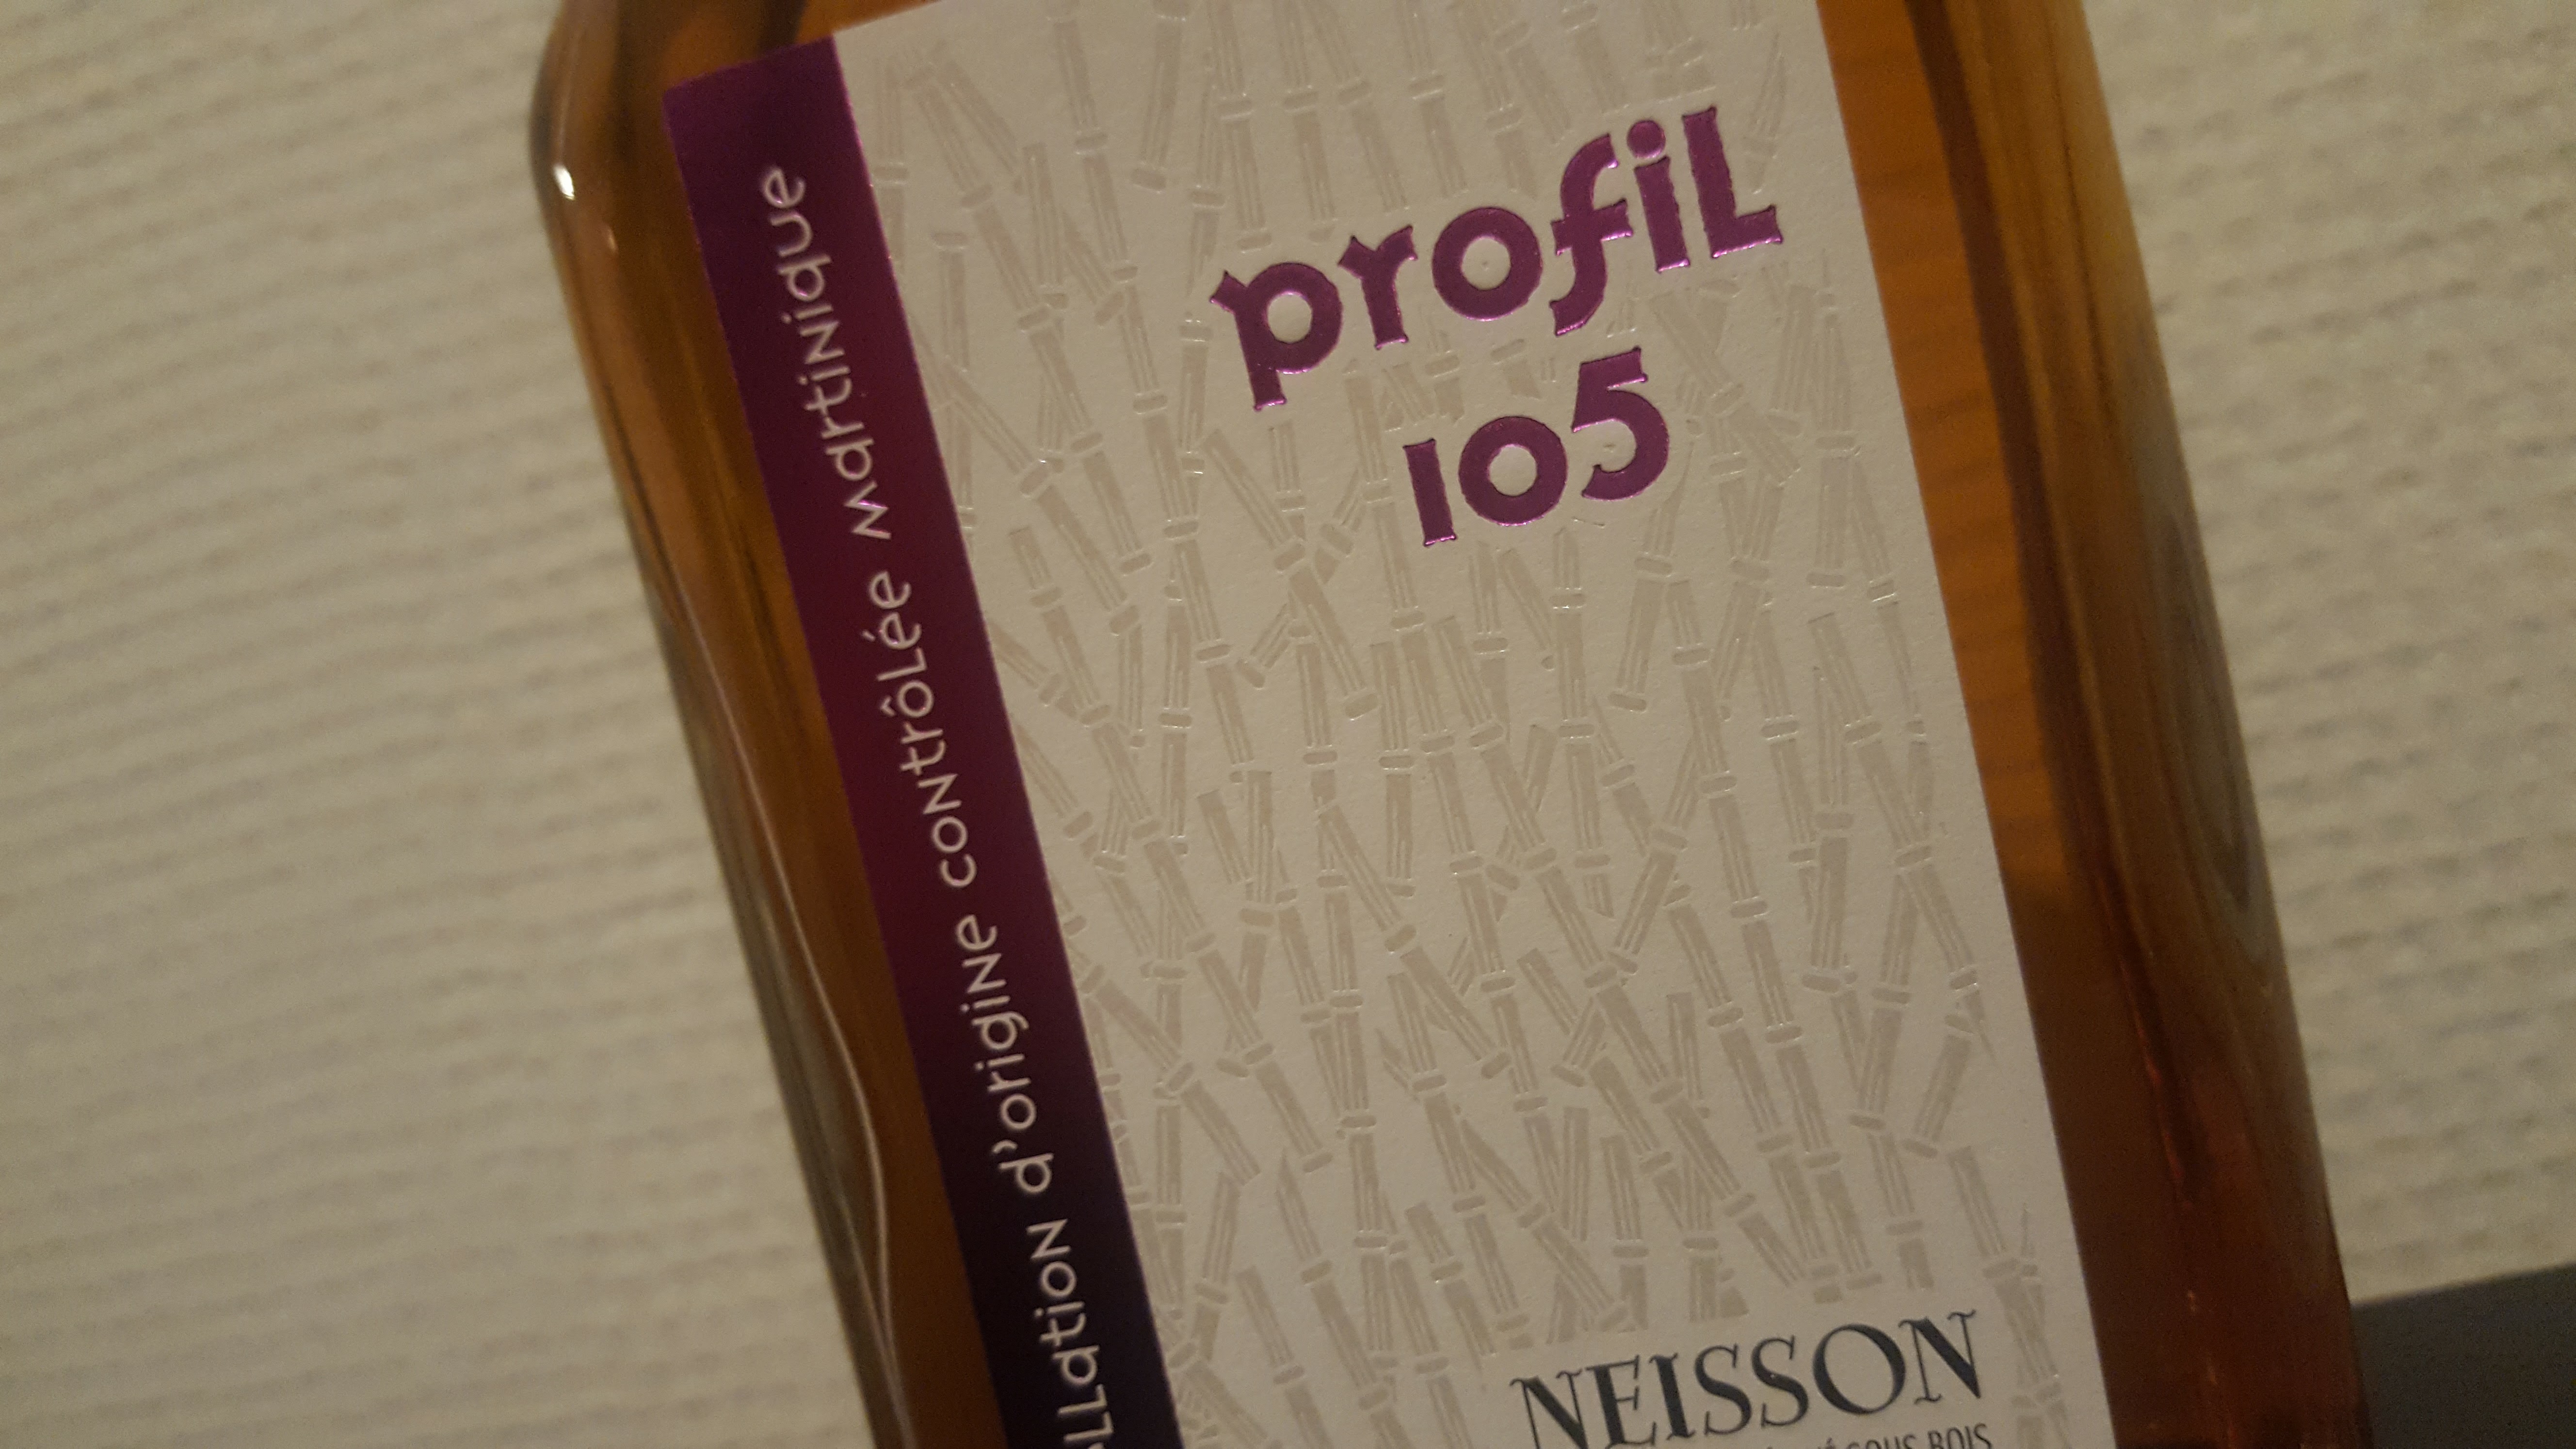 Neisson profil 105